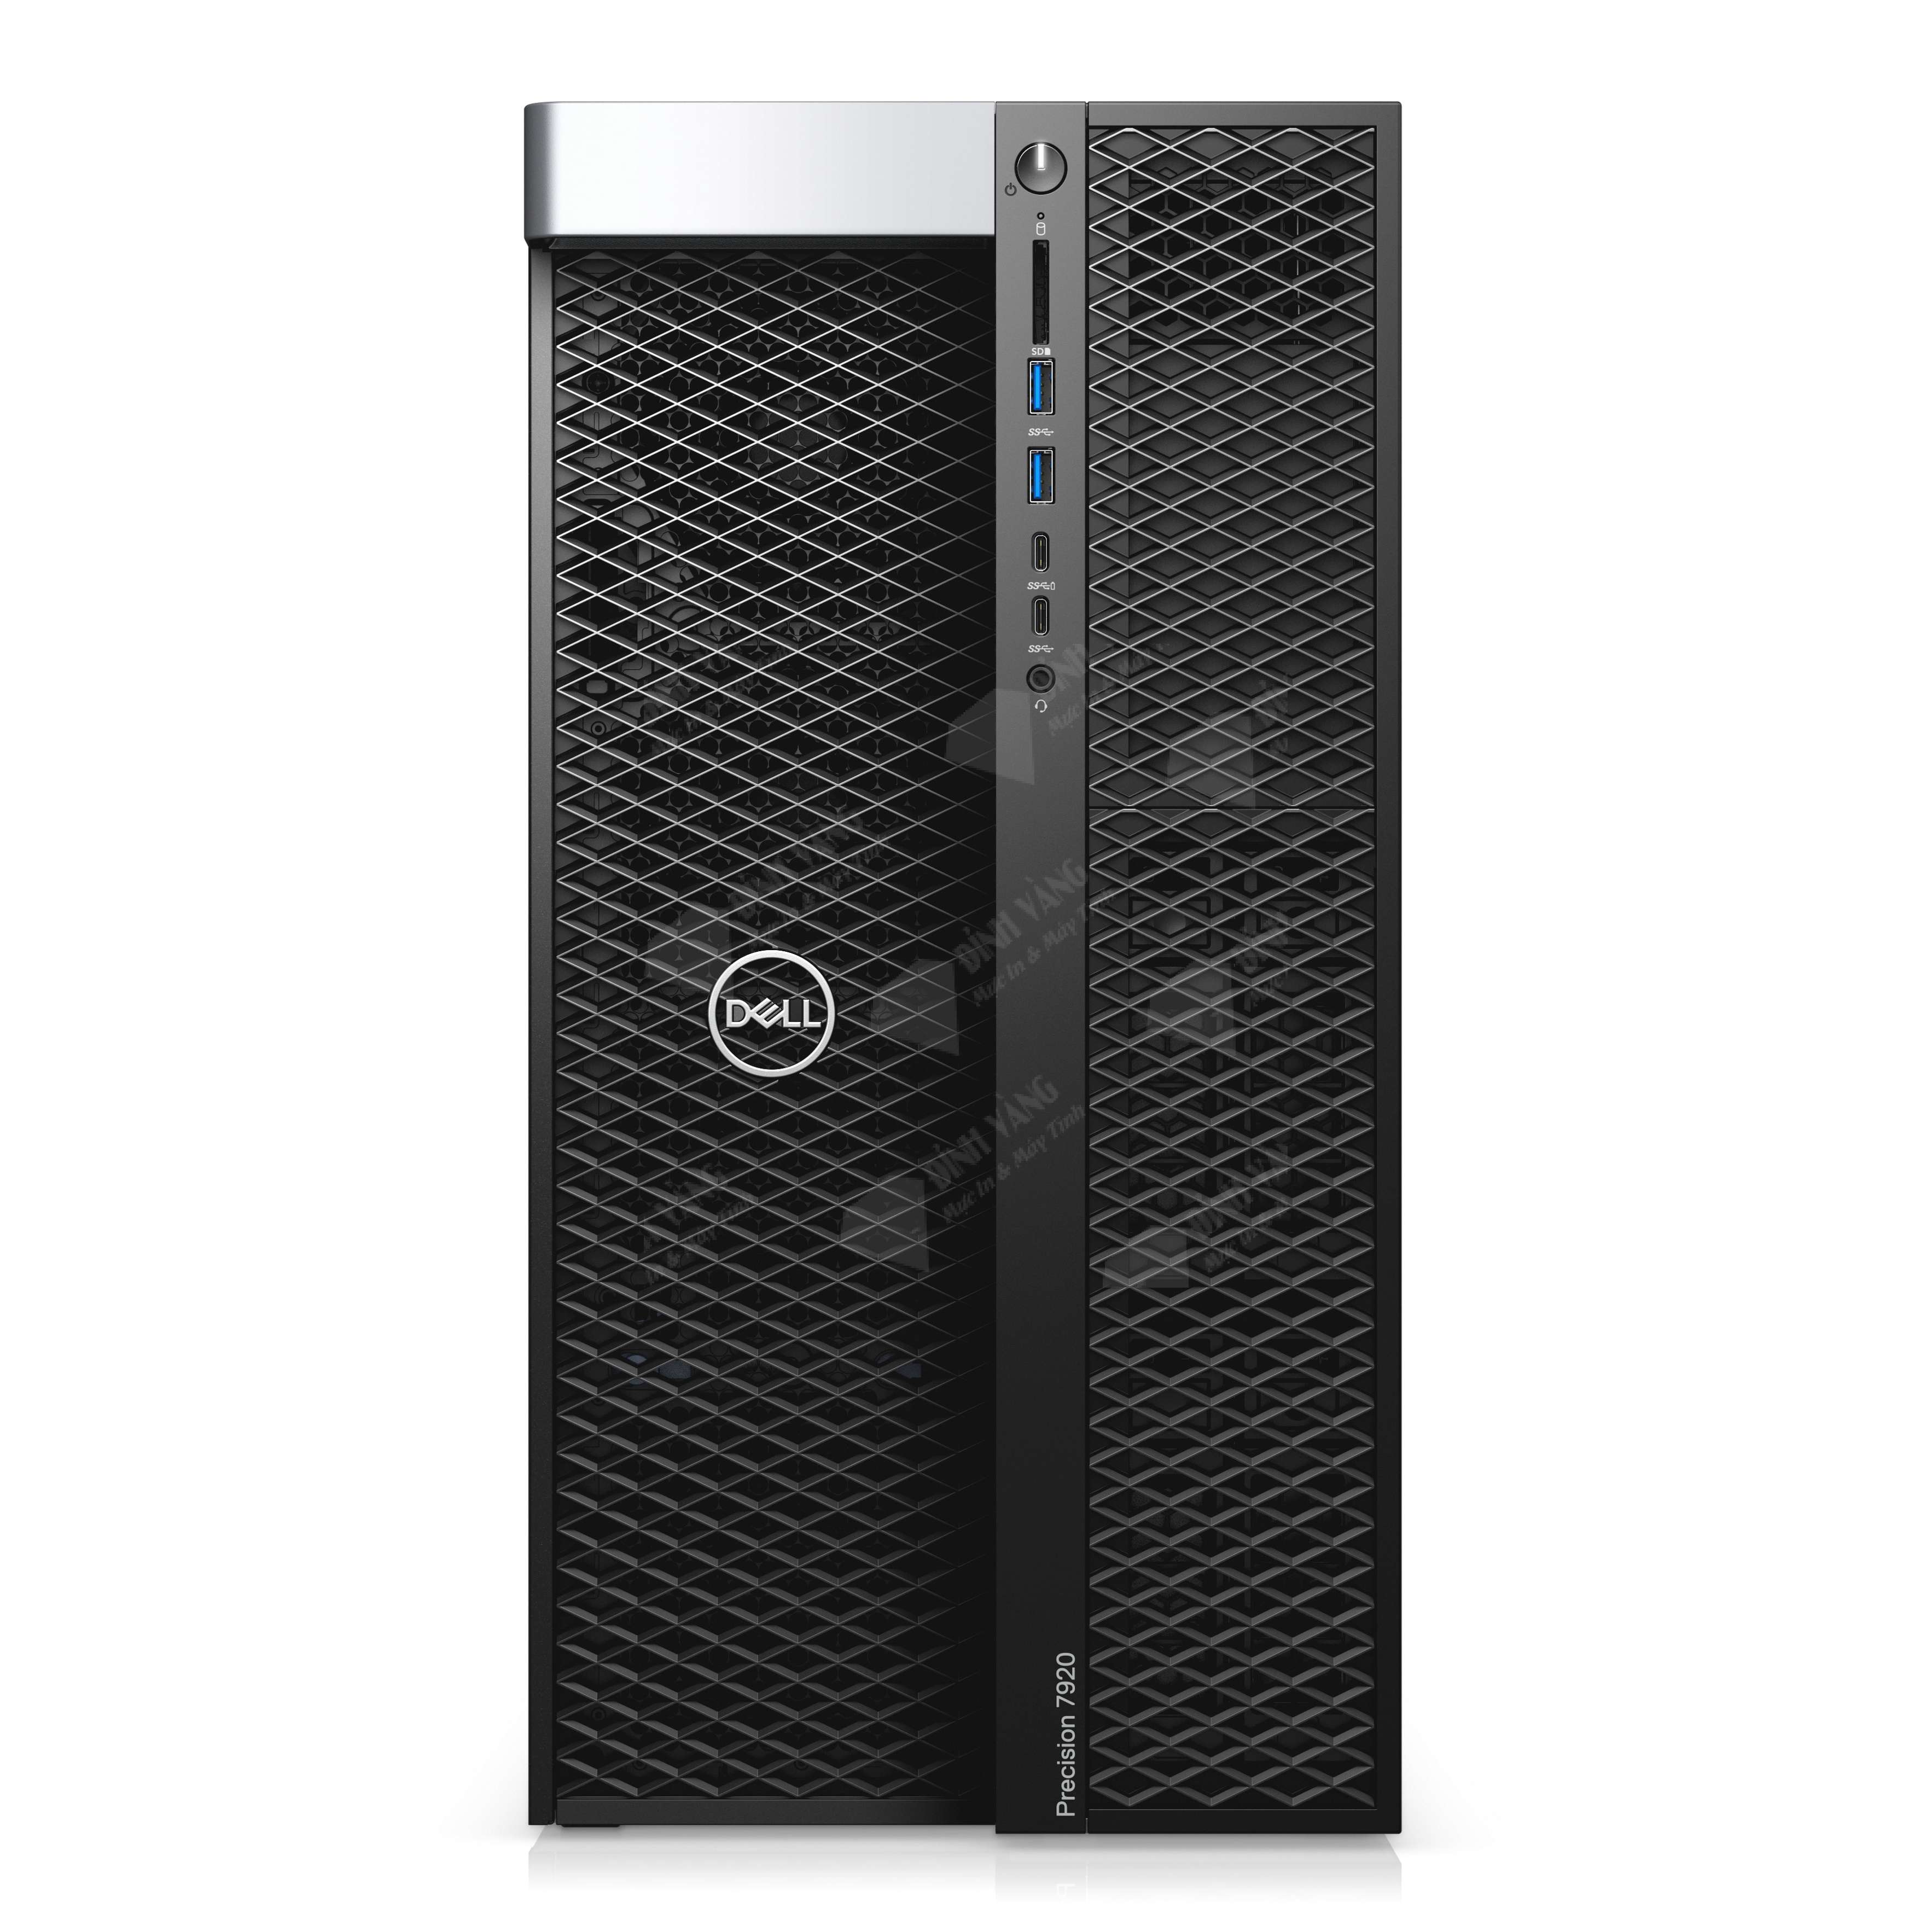 PC Dell Workstation Precision 7920 Tower 42PT79D007 (Intel Xeon Bronze 3106, Ram 16GB, HDD 2TB, Nvidia RTX A4000 16GB, Win10 Pro, 3Y)